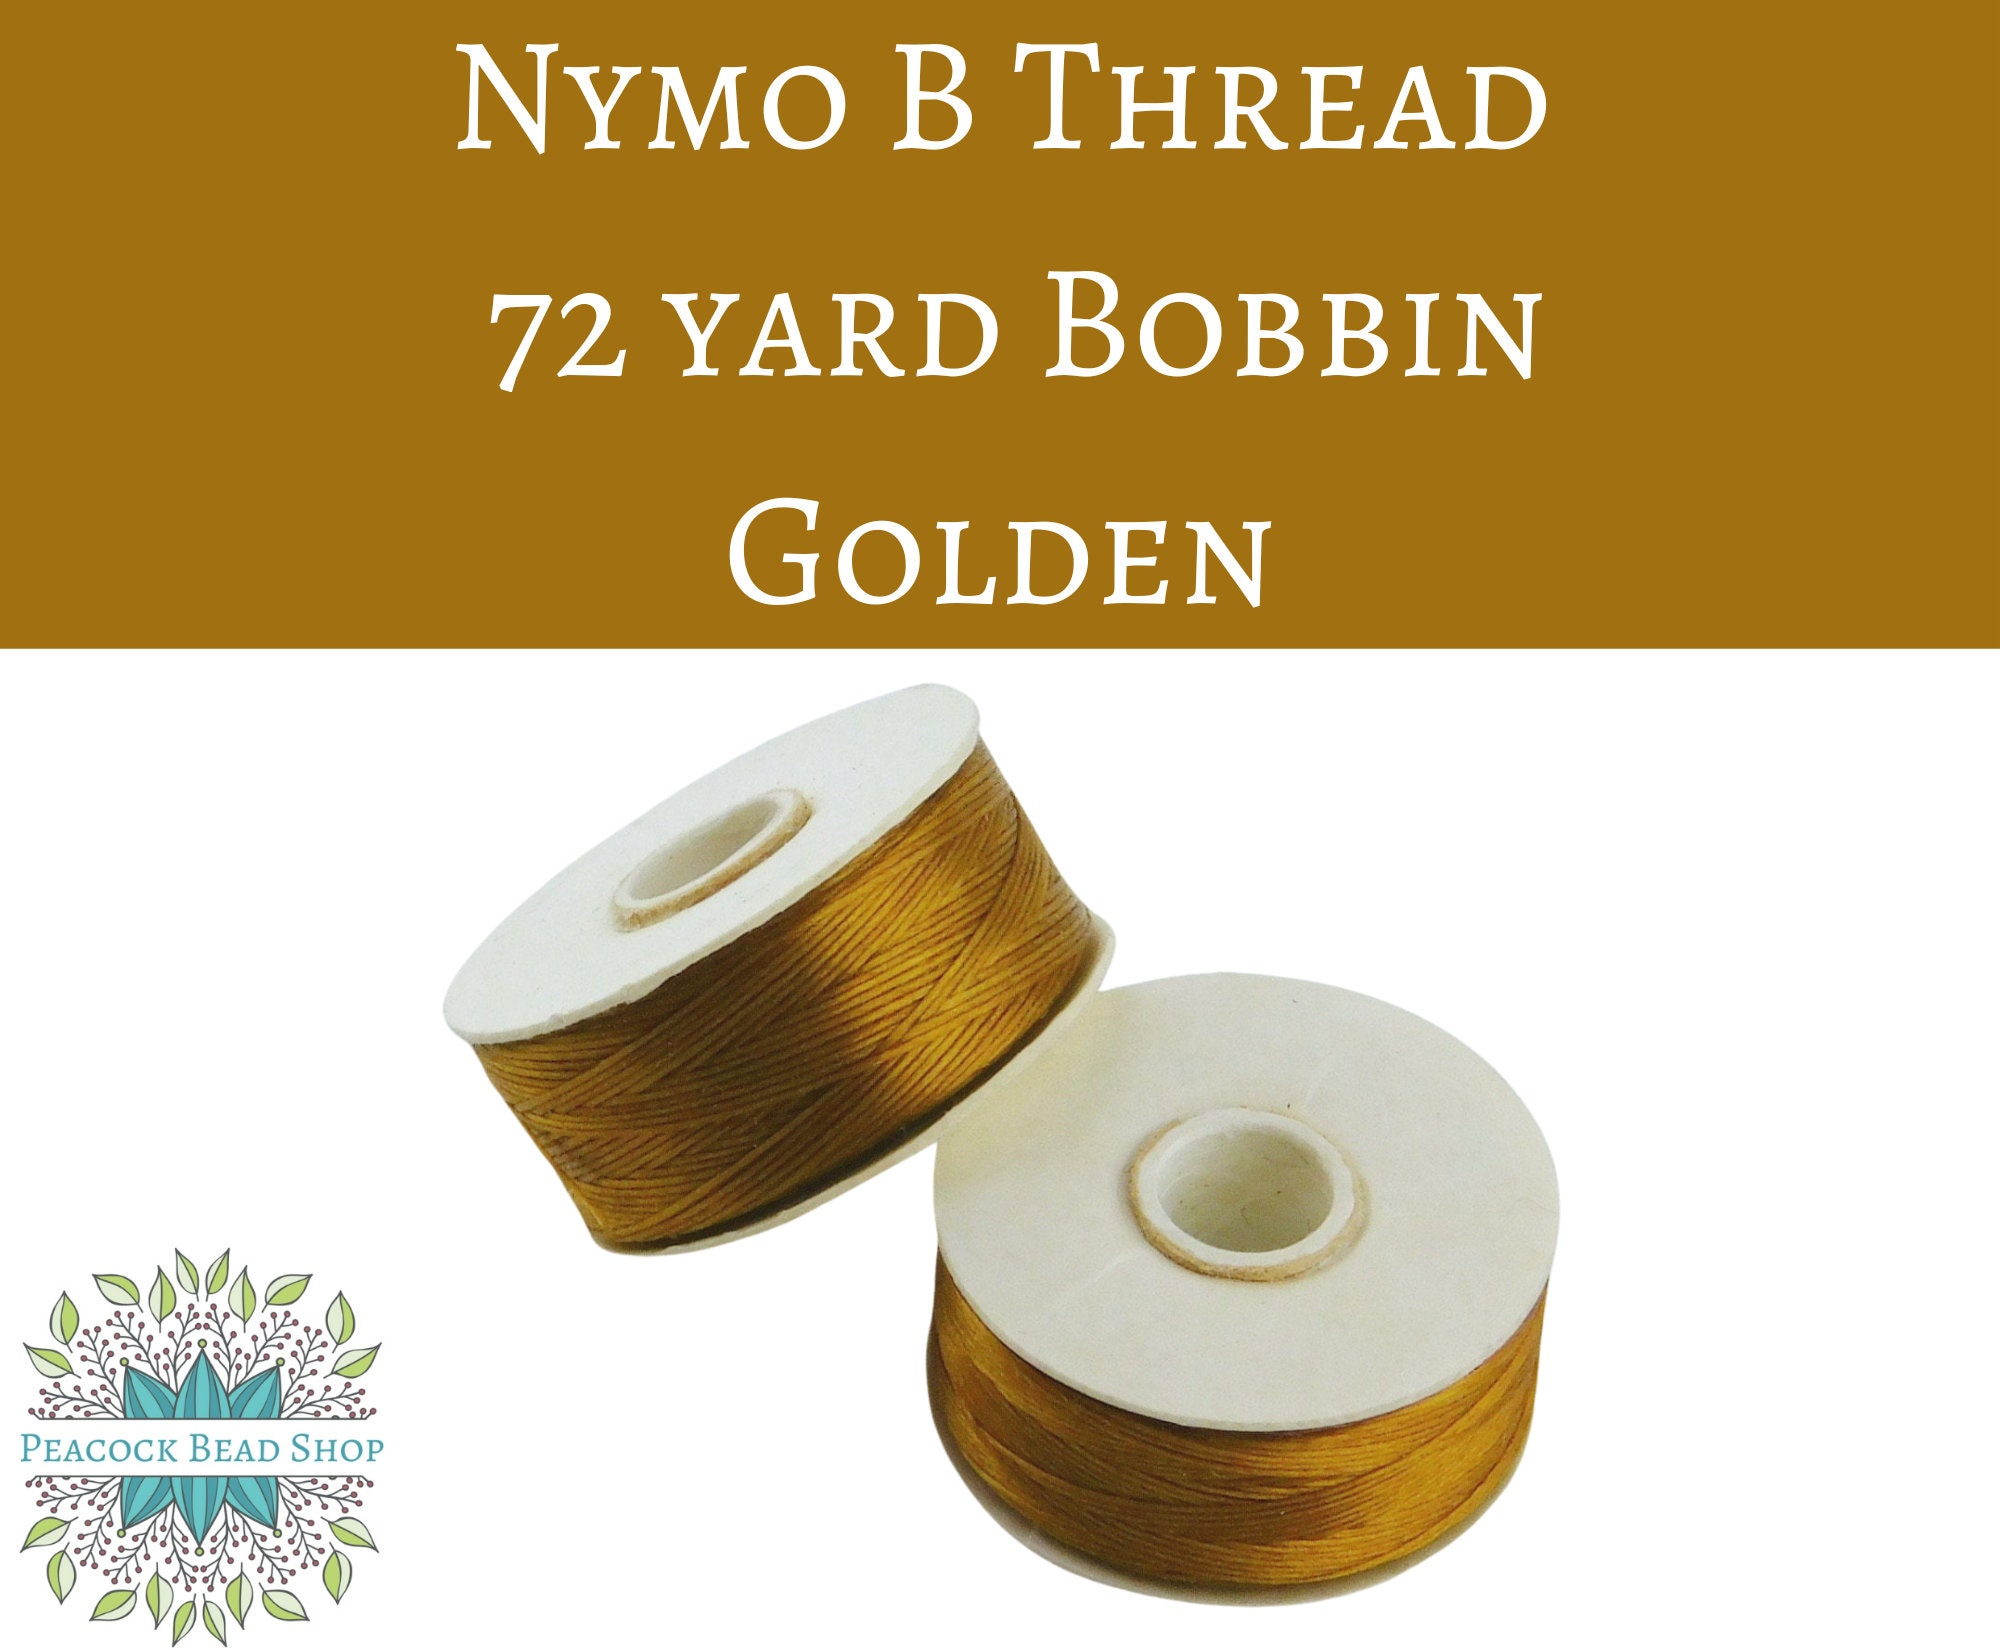 72pcs Prewound Bobbins And Thread Spools, 36 Colors 400 Yards Per Polyester  Thread Spools, 36 Colors Prewound Bobbin For Hand & Machine Sewing, Emerge